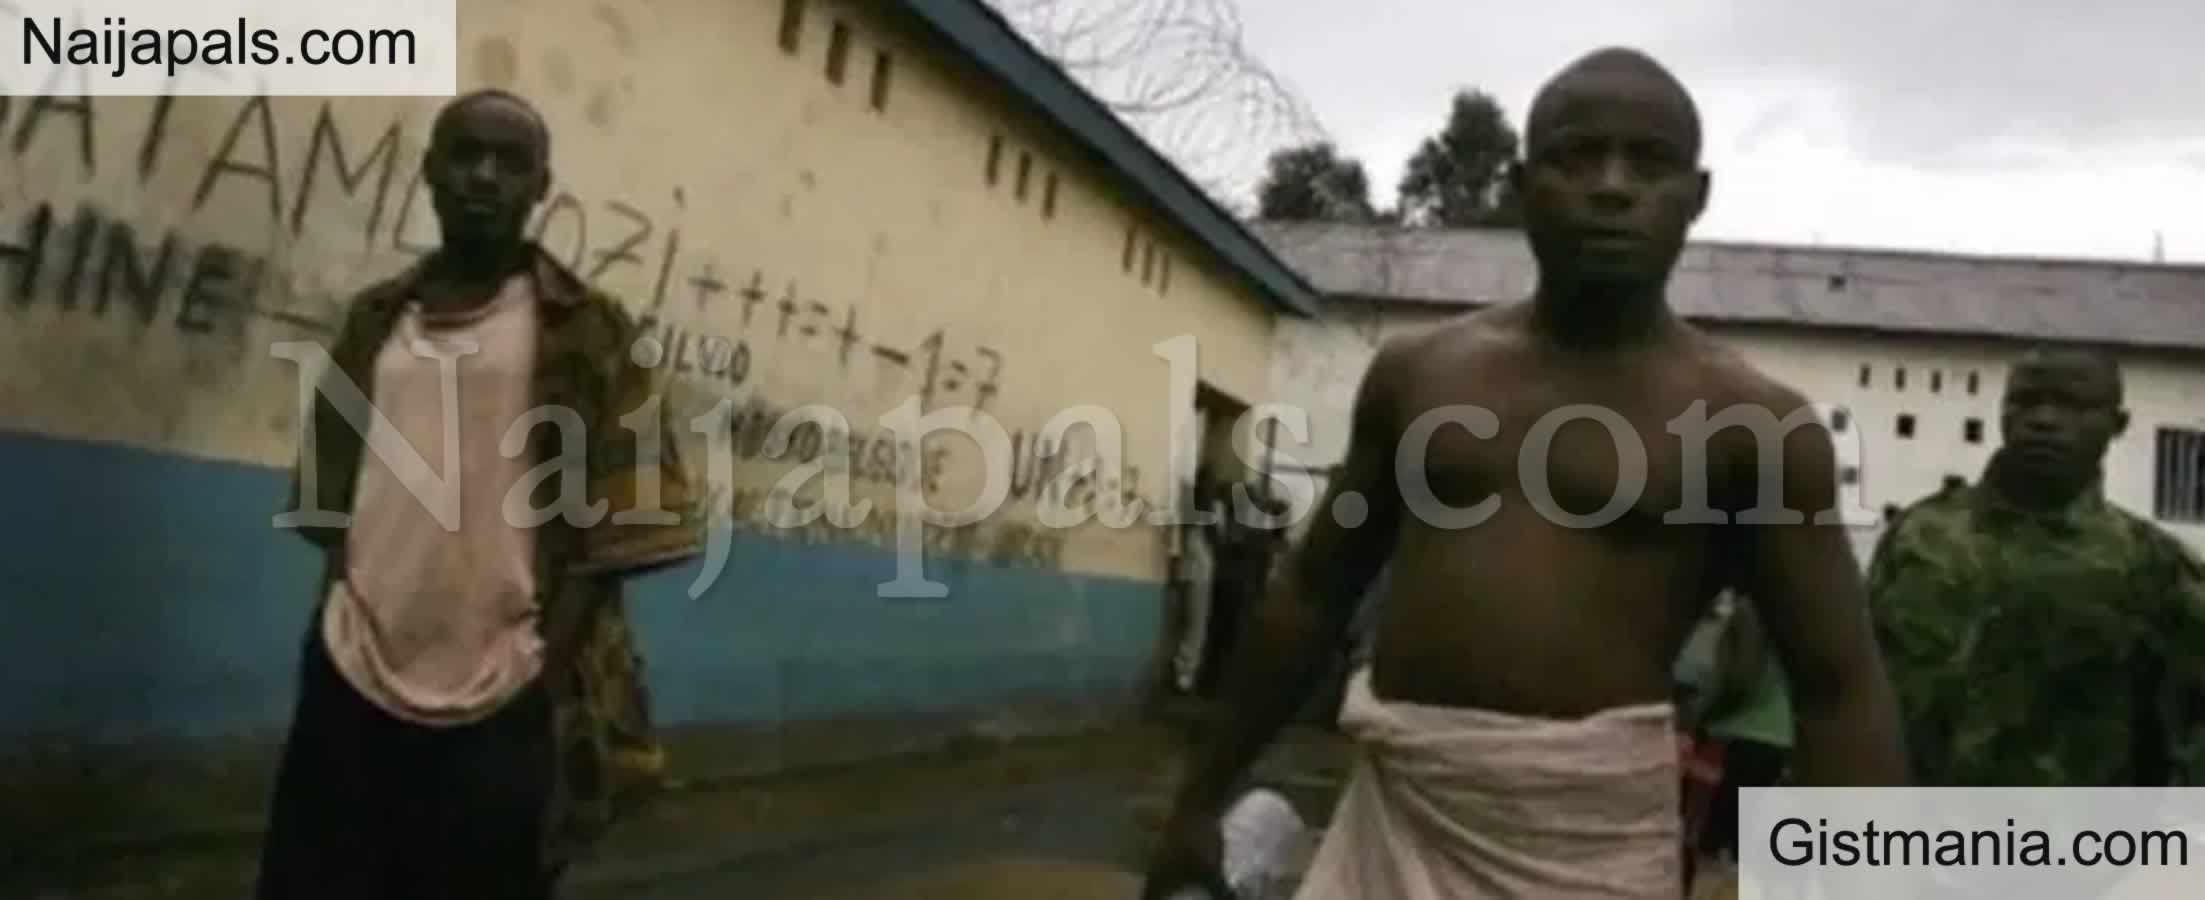 Over 200 jailed men escaped from prison in Uganda 